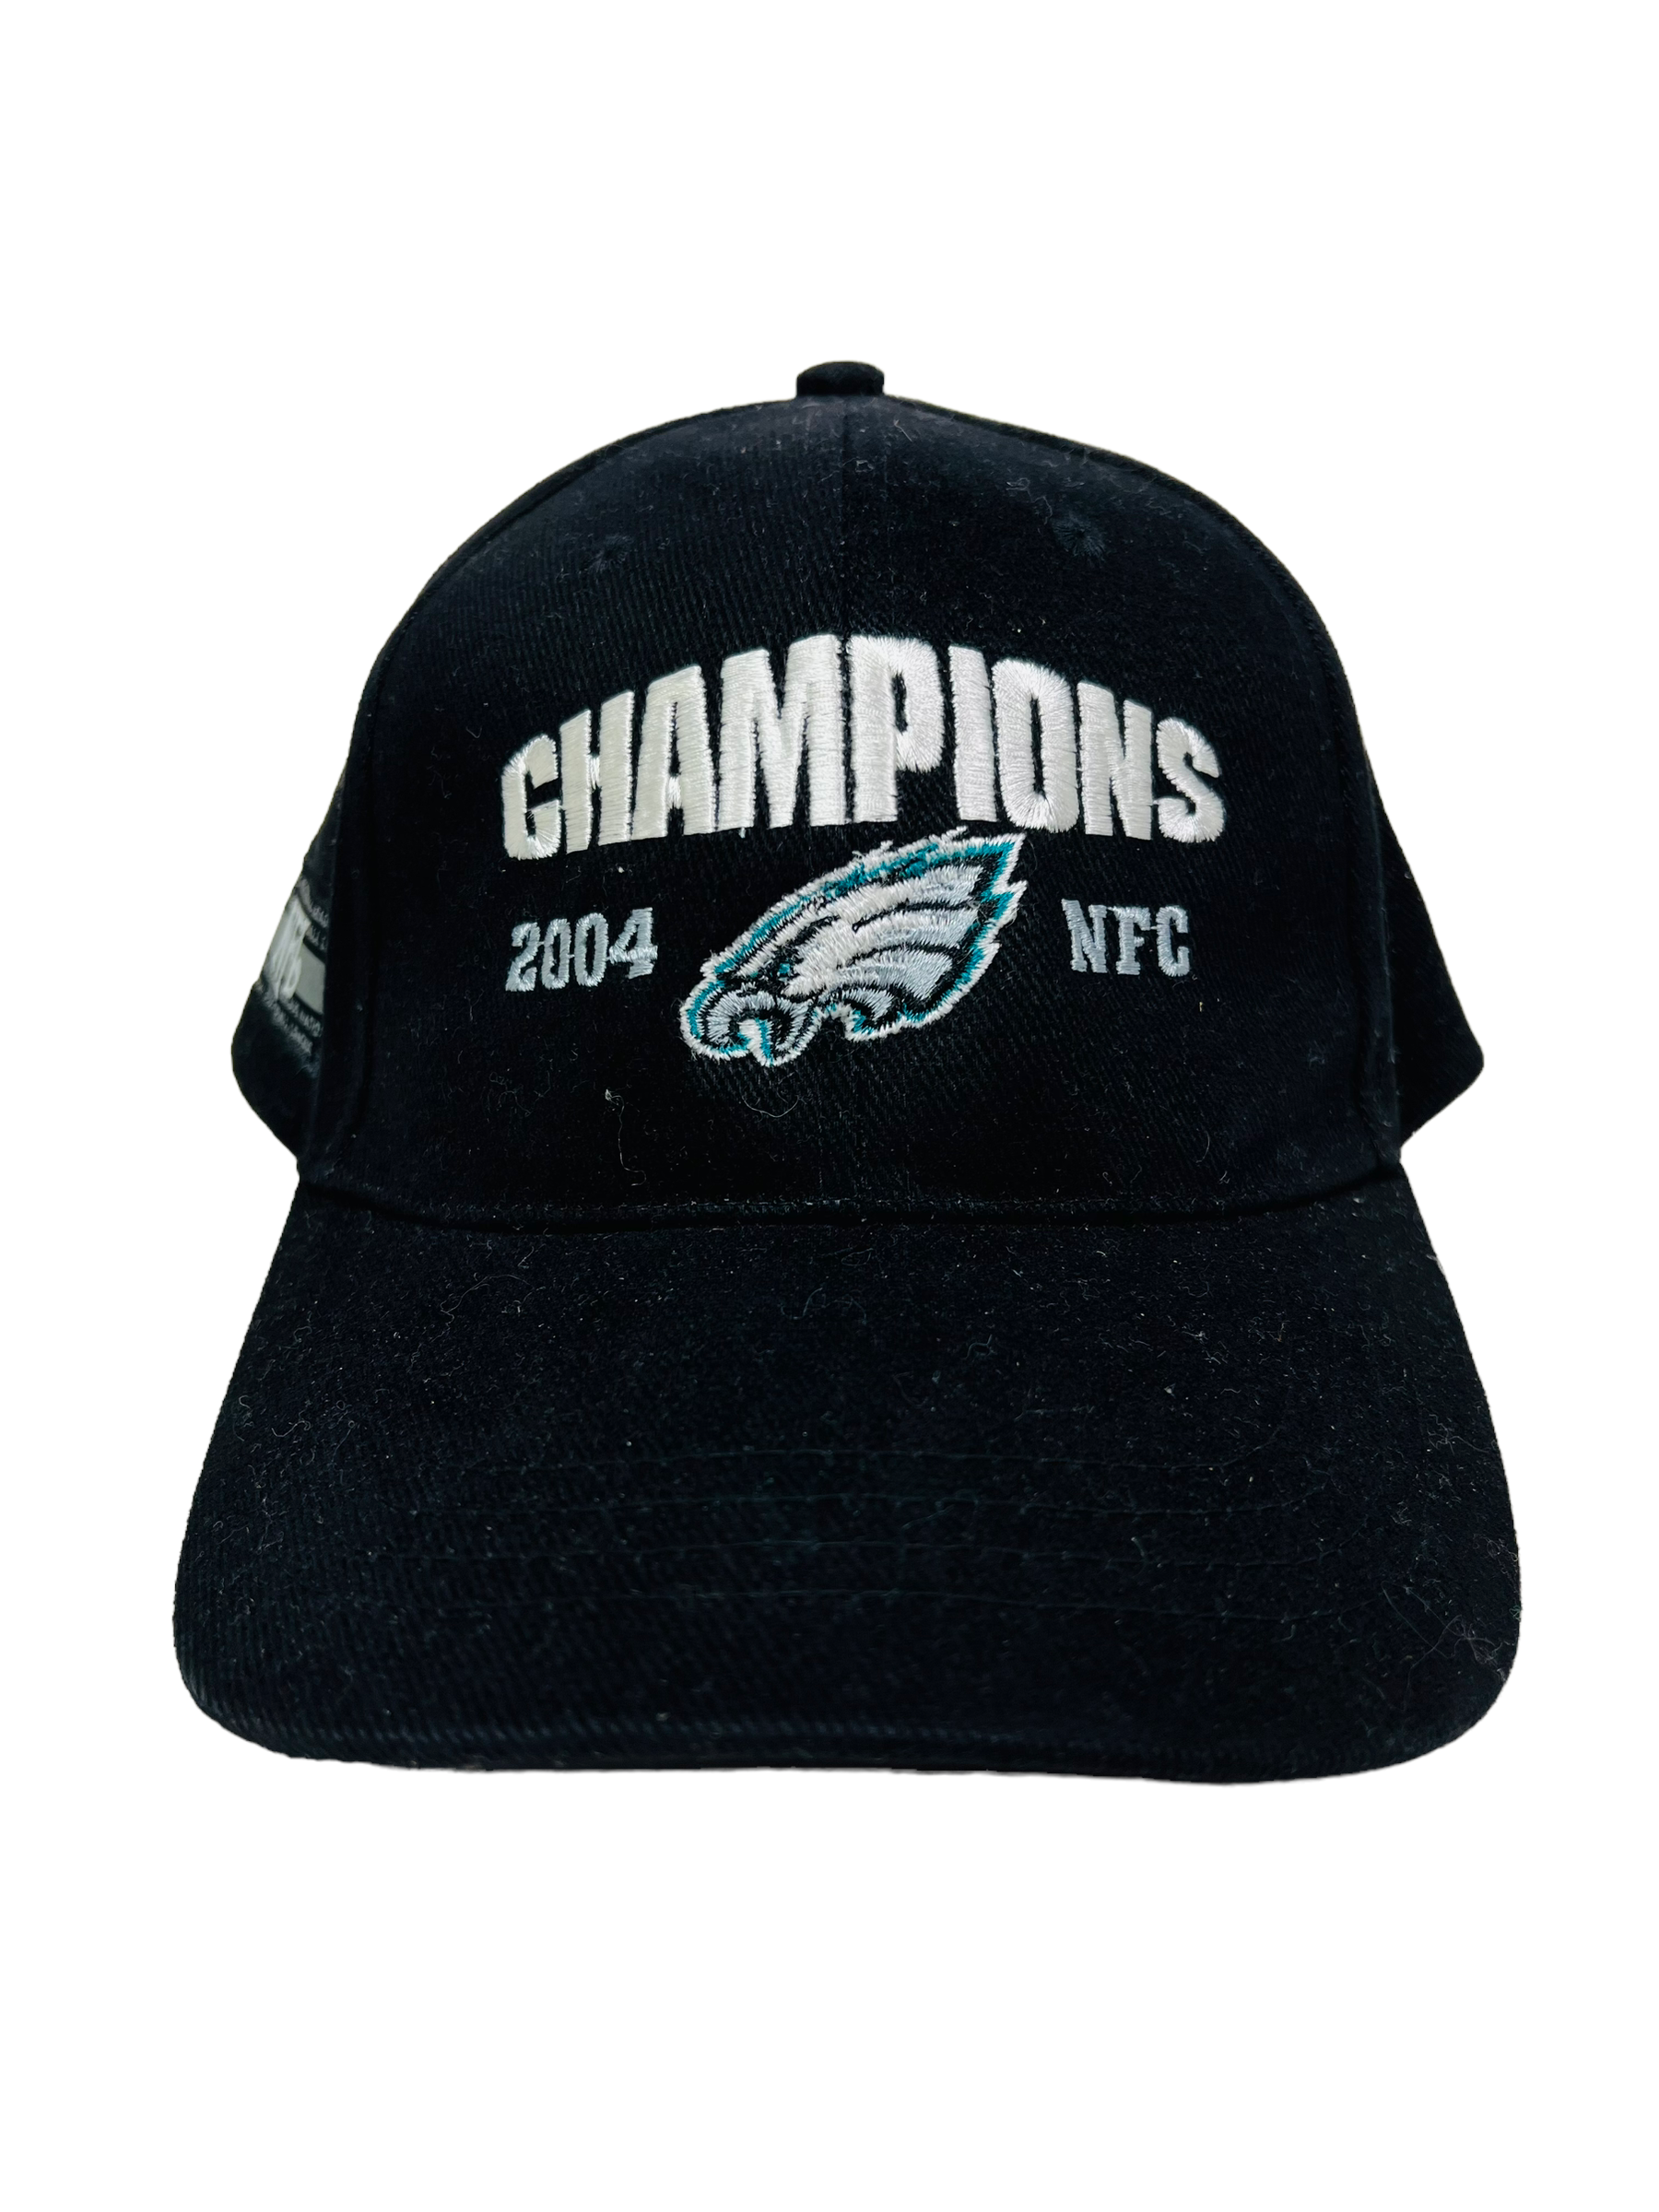 nfc champions hat